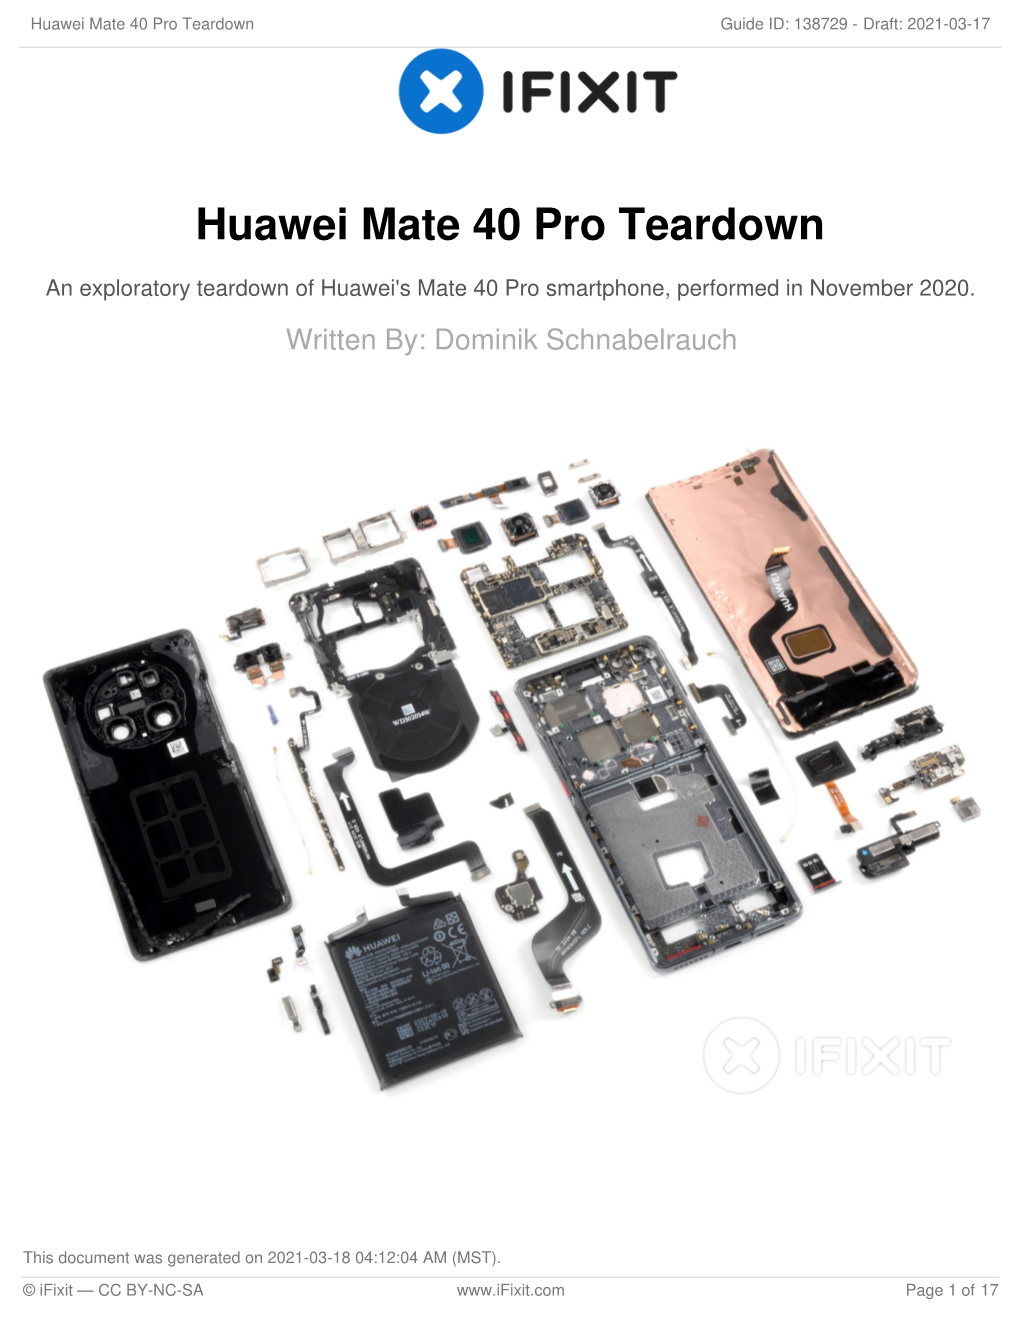 Huawei Mate 40 Pro Teardown Guide ID: 138729 - Draft: 2021-03-17